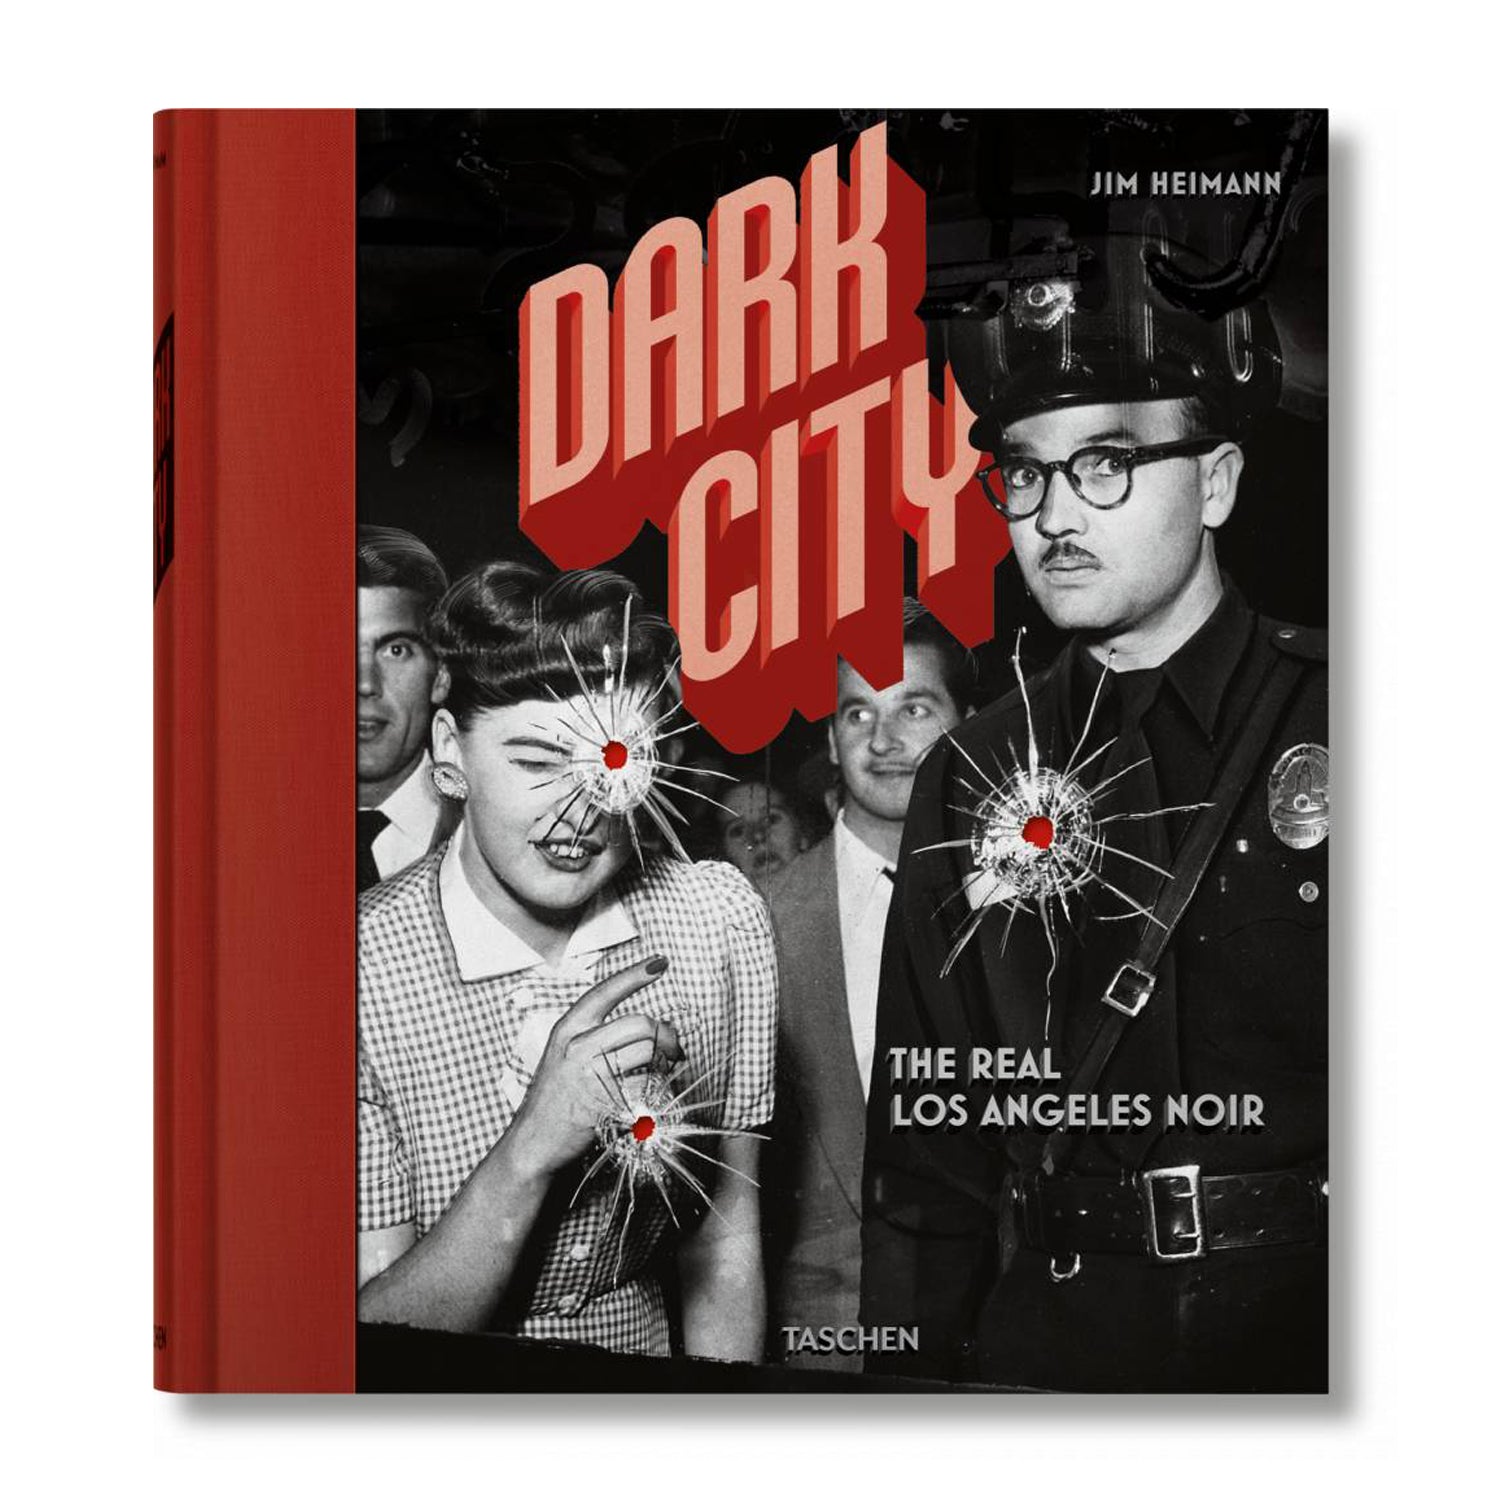 Dark City: The Real Los Angeles Noir by Jim Heimann Photo Museum Ireland